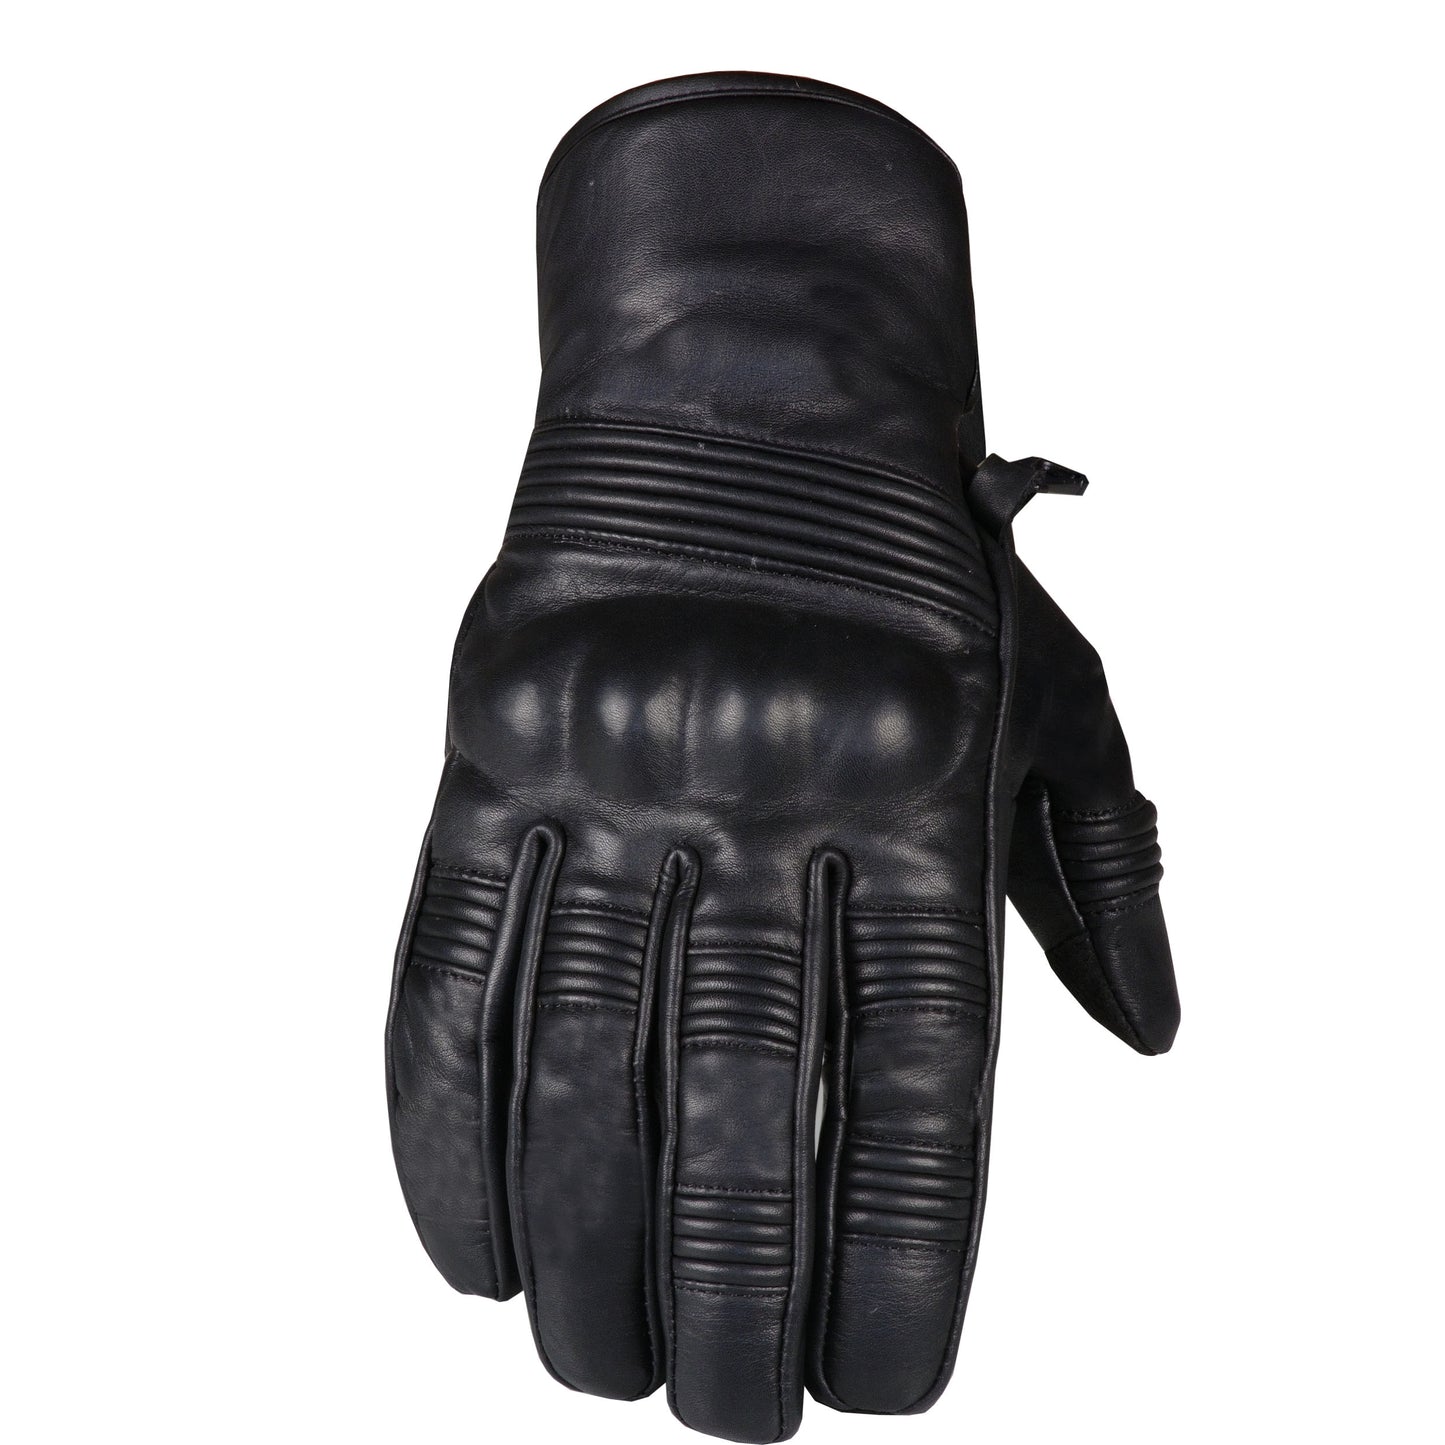 Jackets 4 Bikes Men's Genuine Leather Cruiser Street Biker Padded Gloves